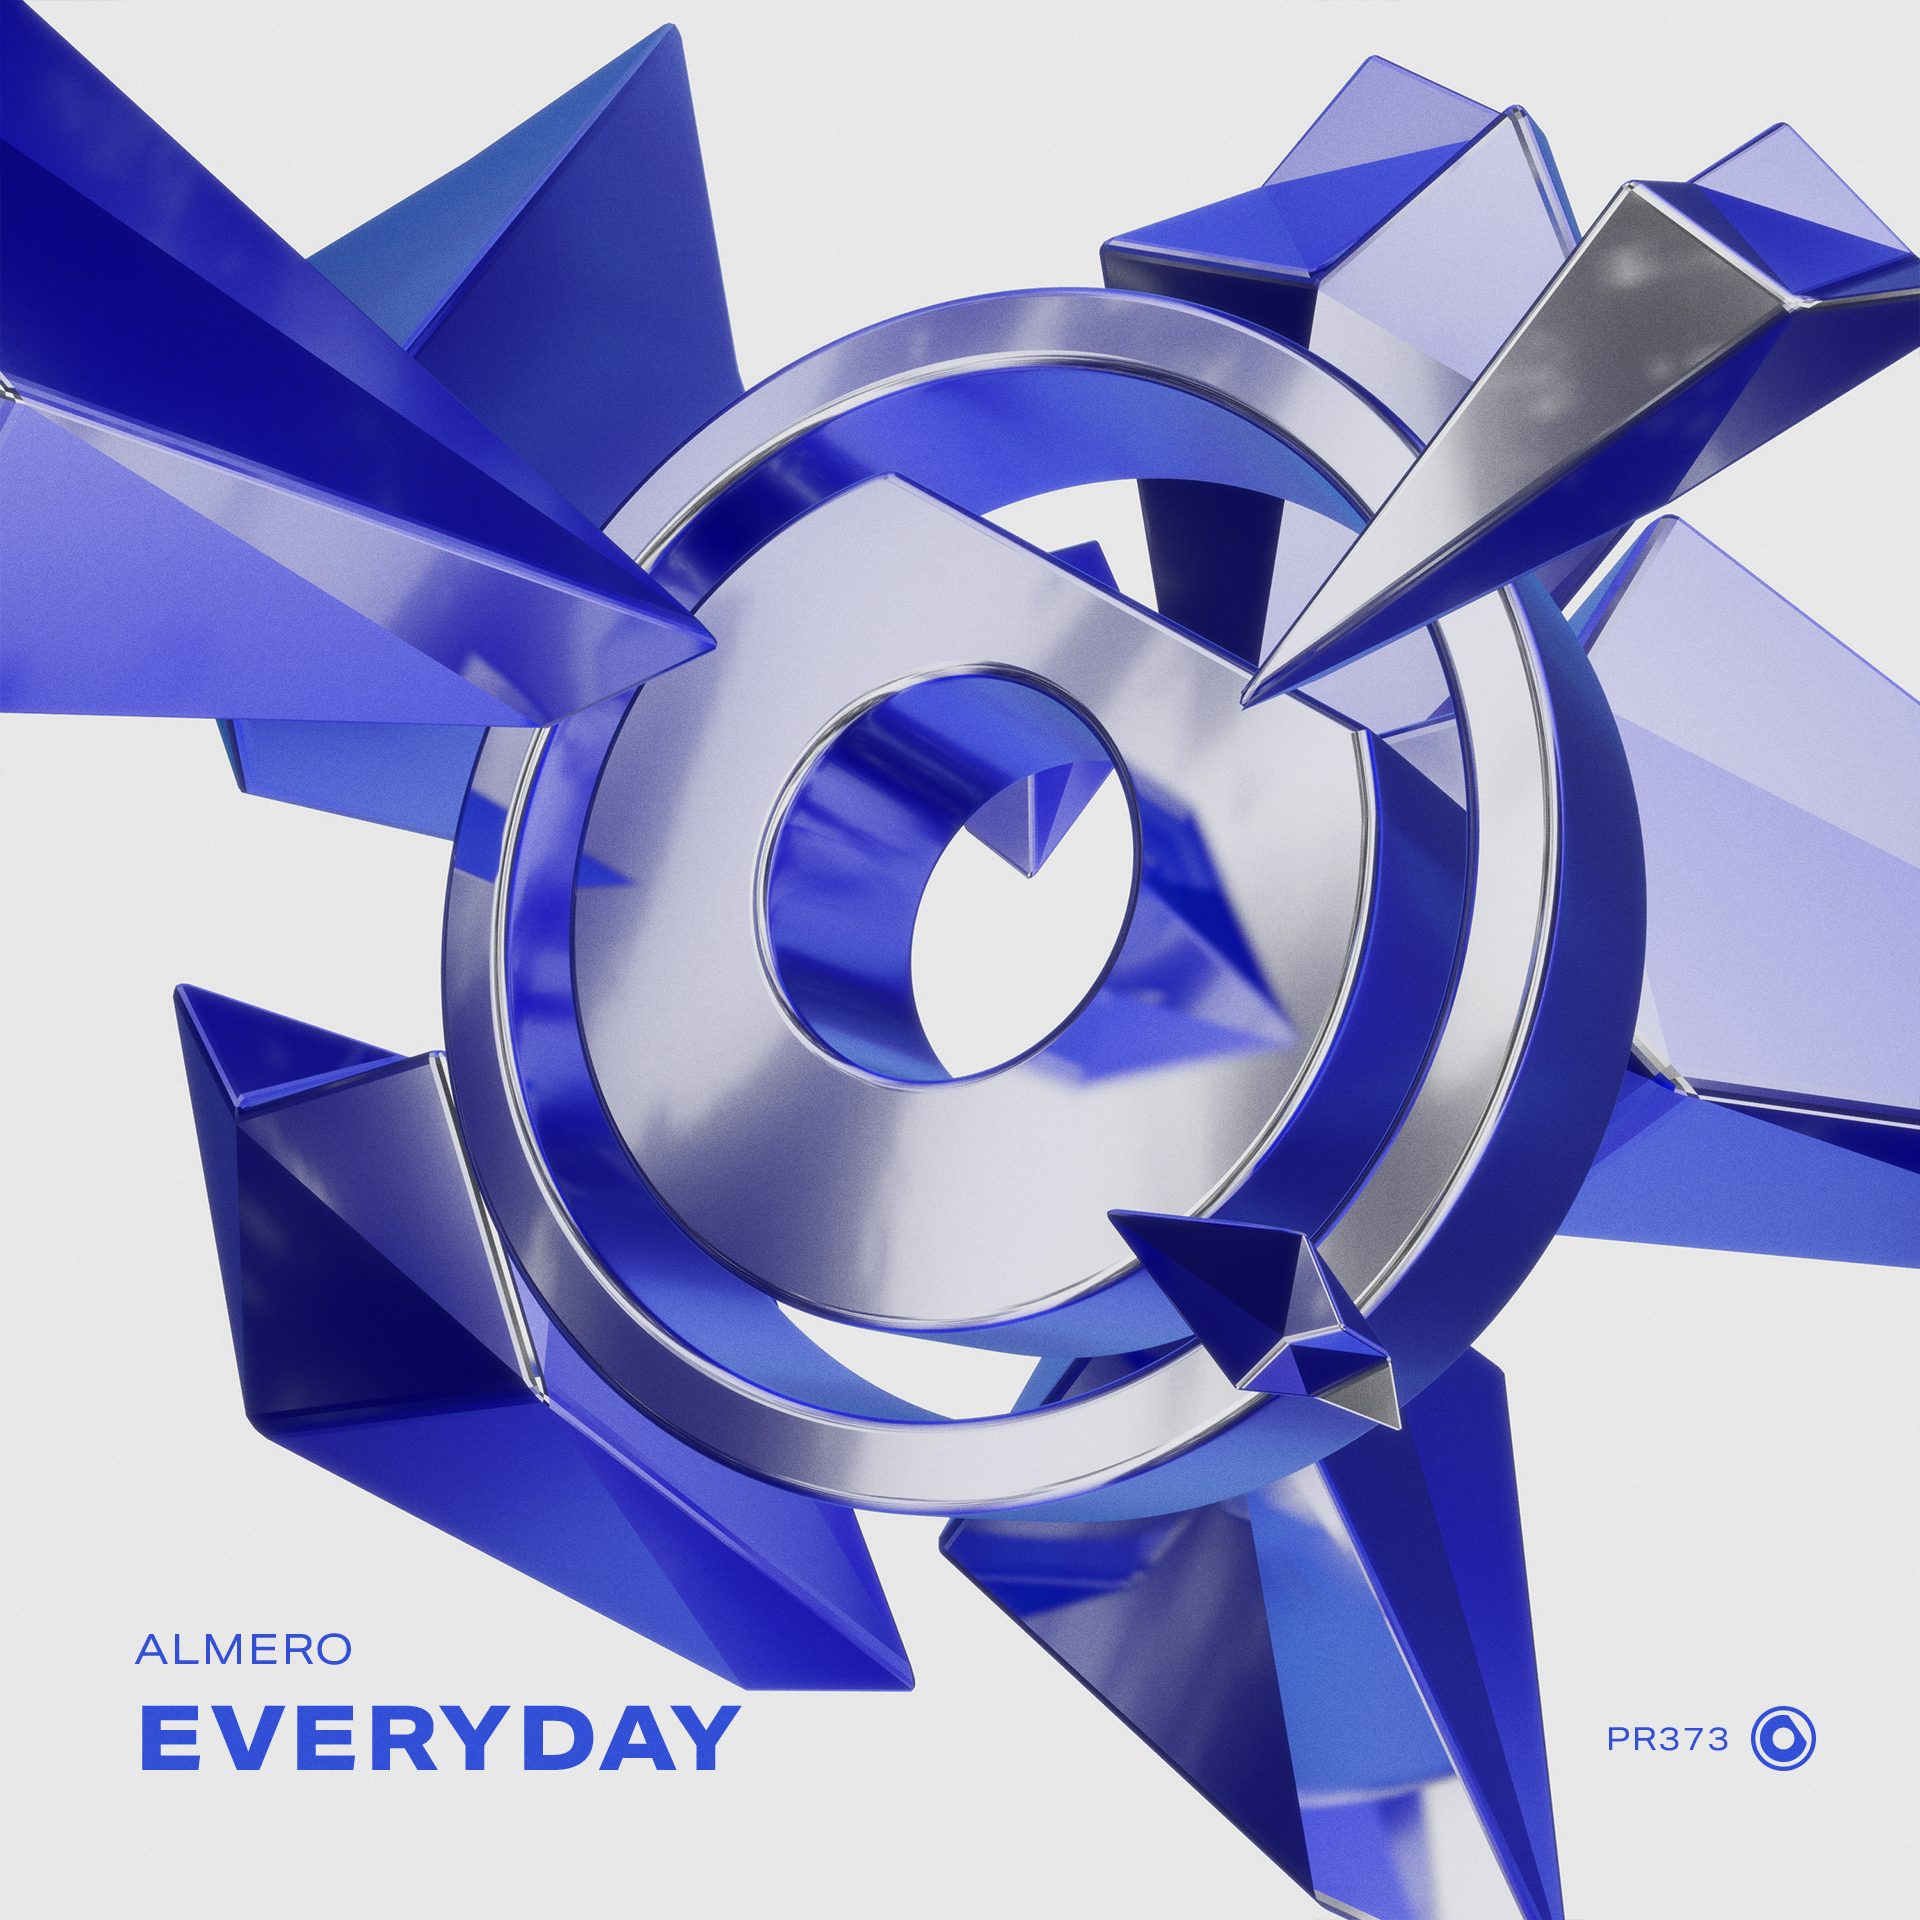 Almero — Everyday cover artwork